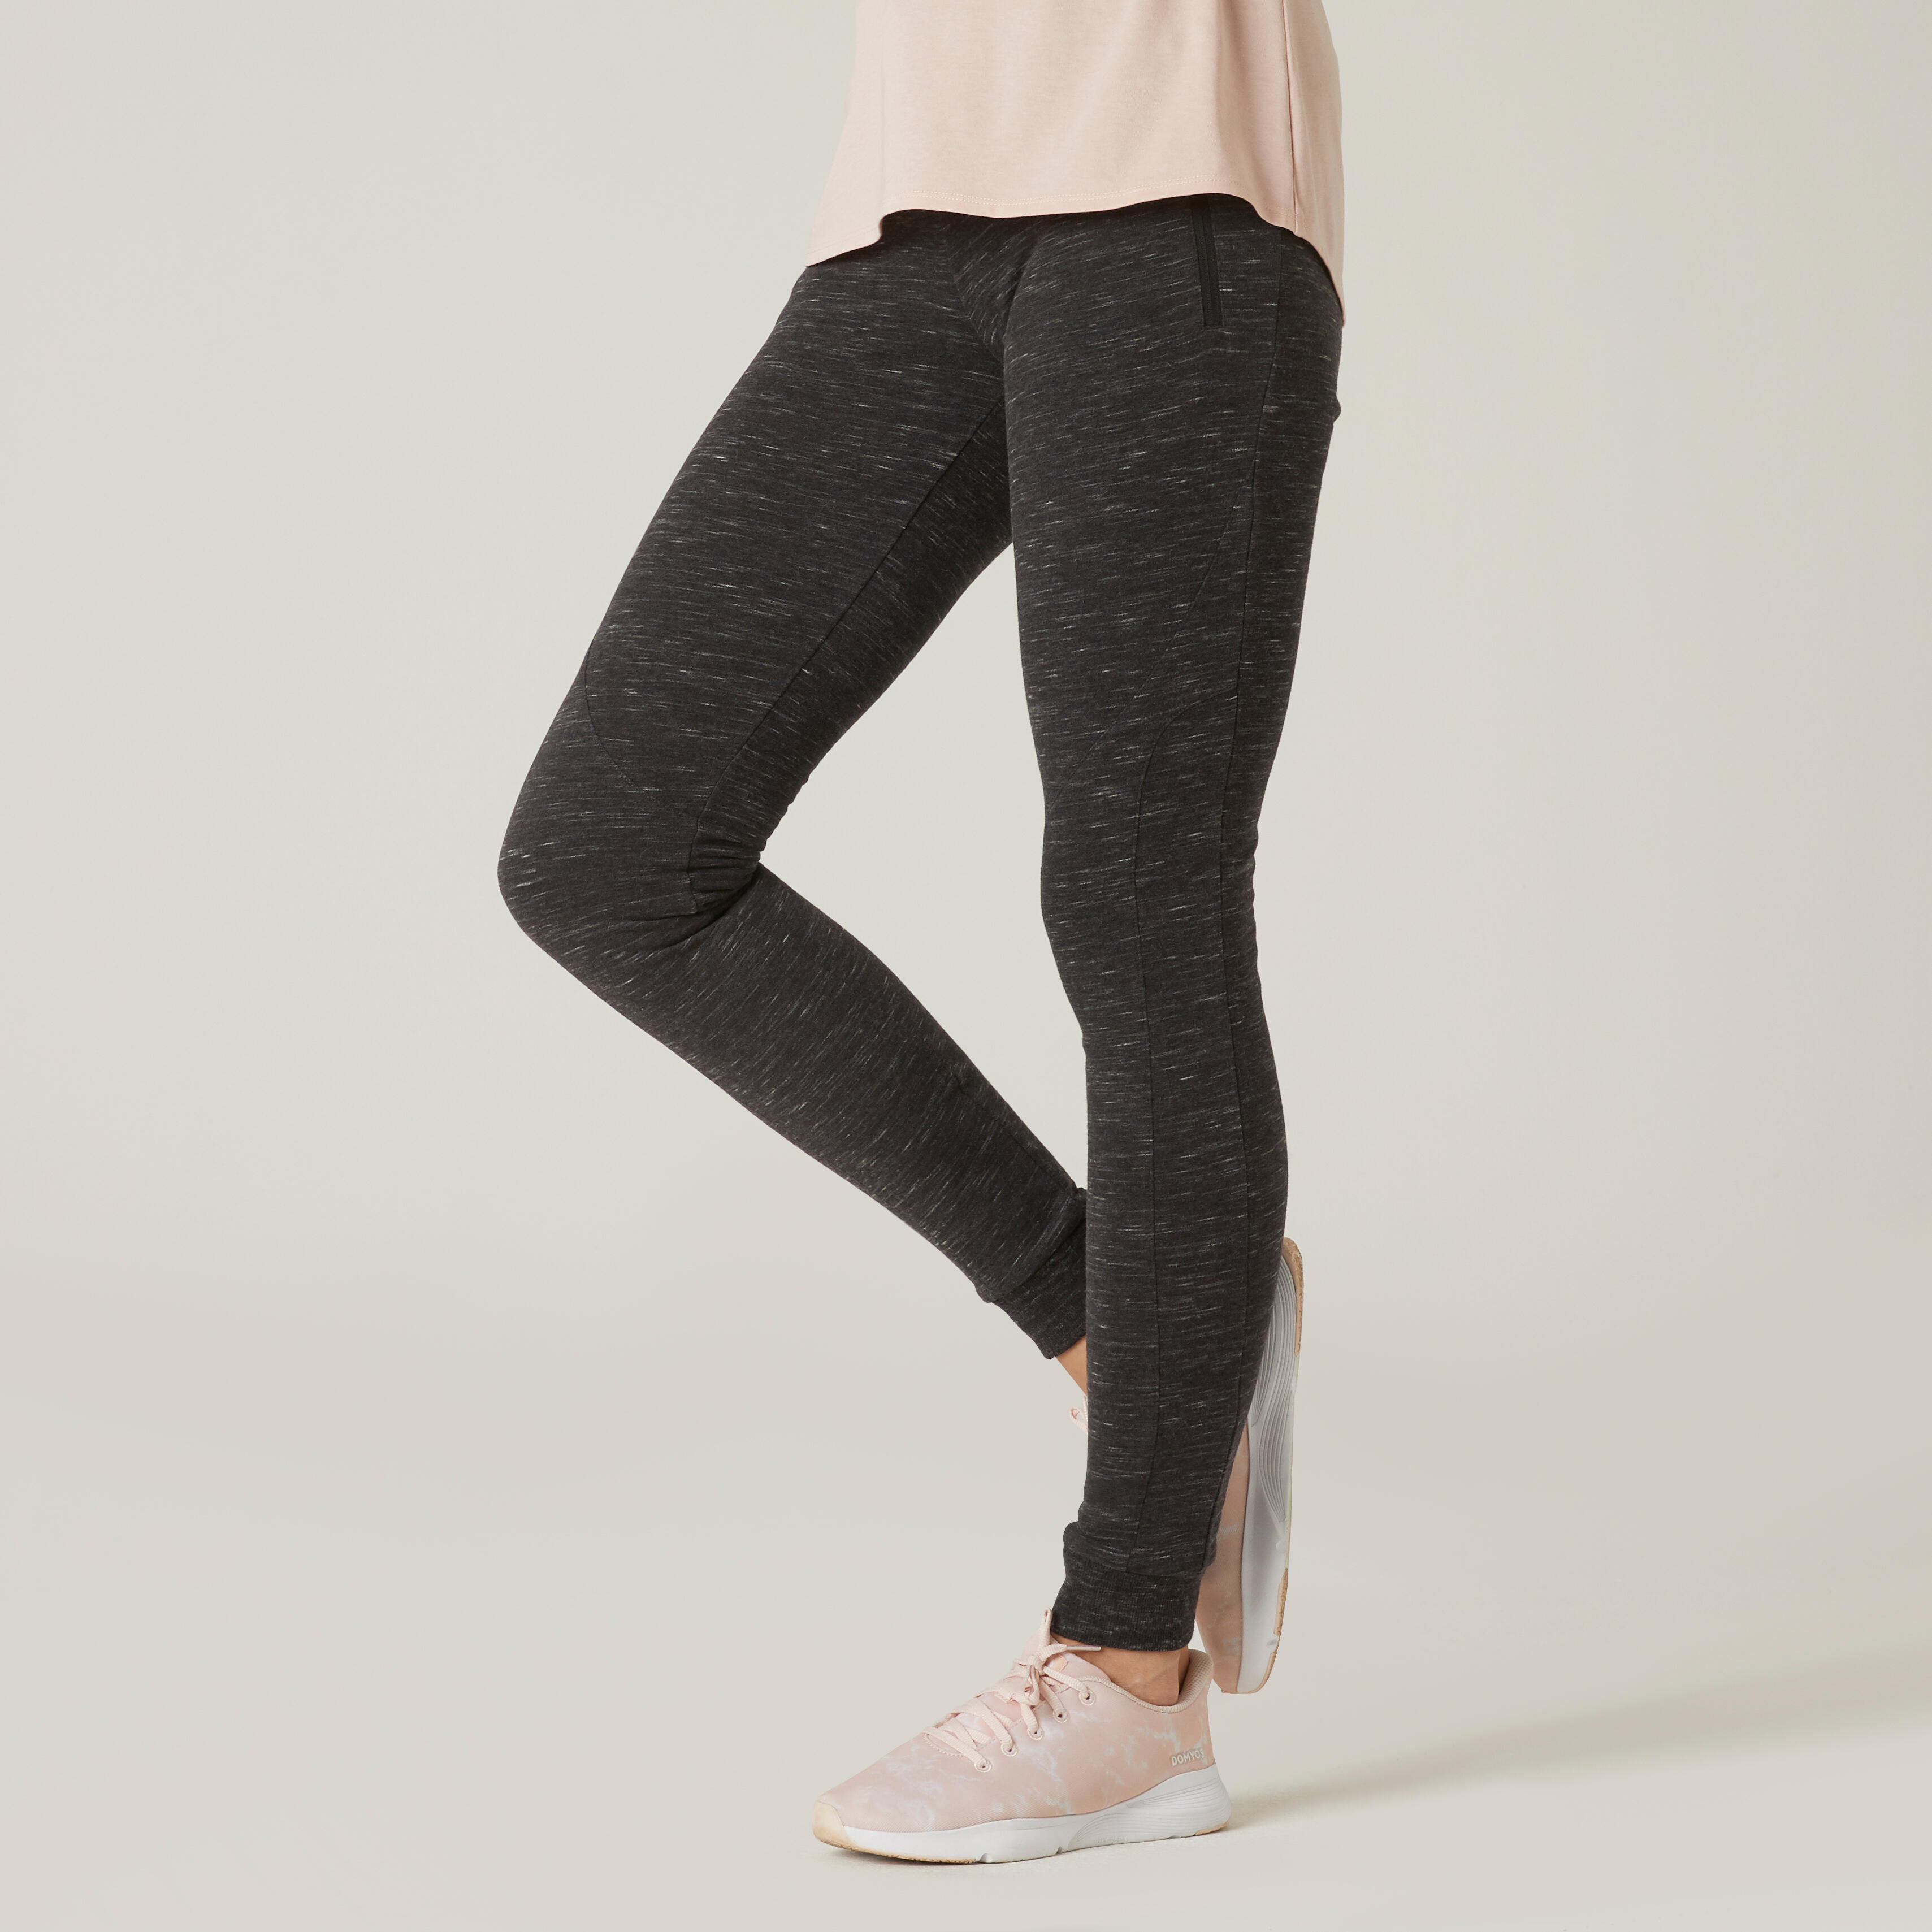 Women's Cotton Fleece Slim Fit Gym Joggers 520 - Black/Grey